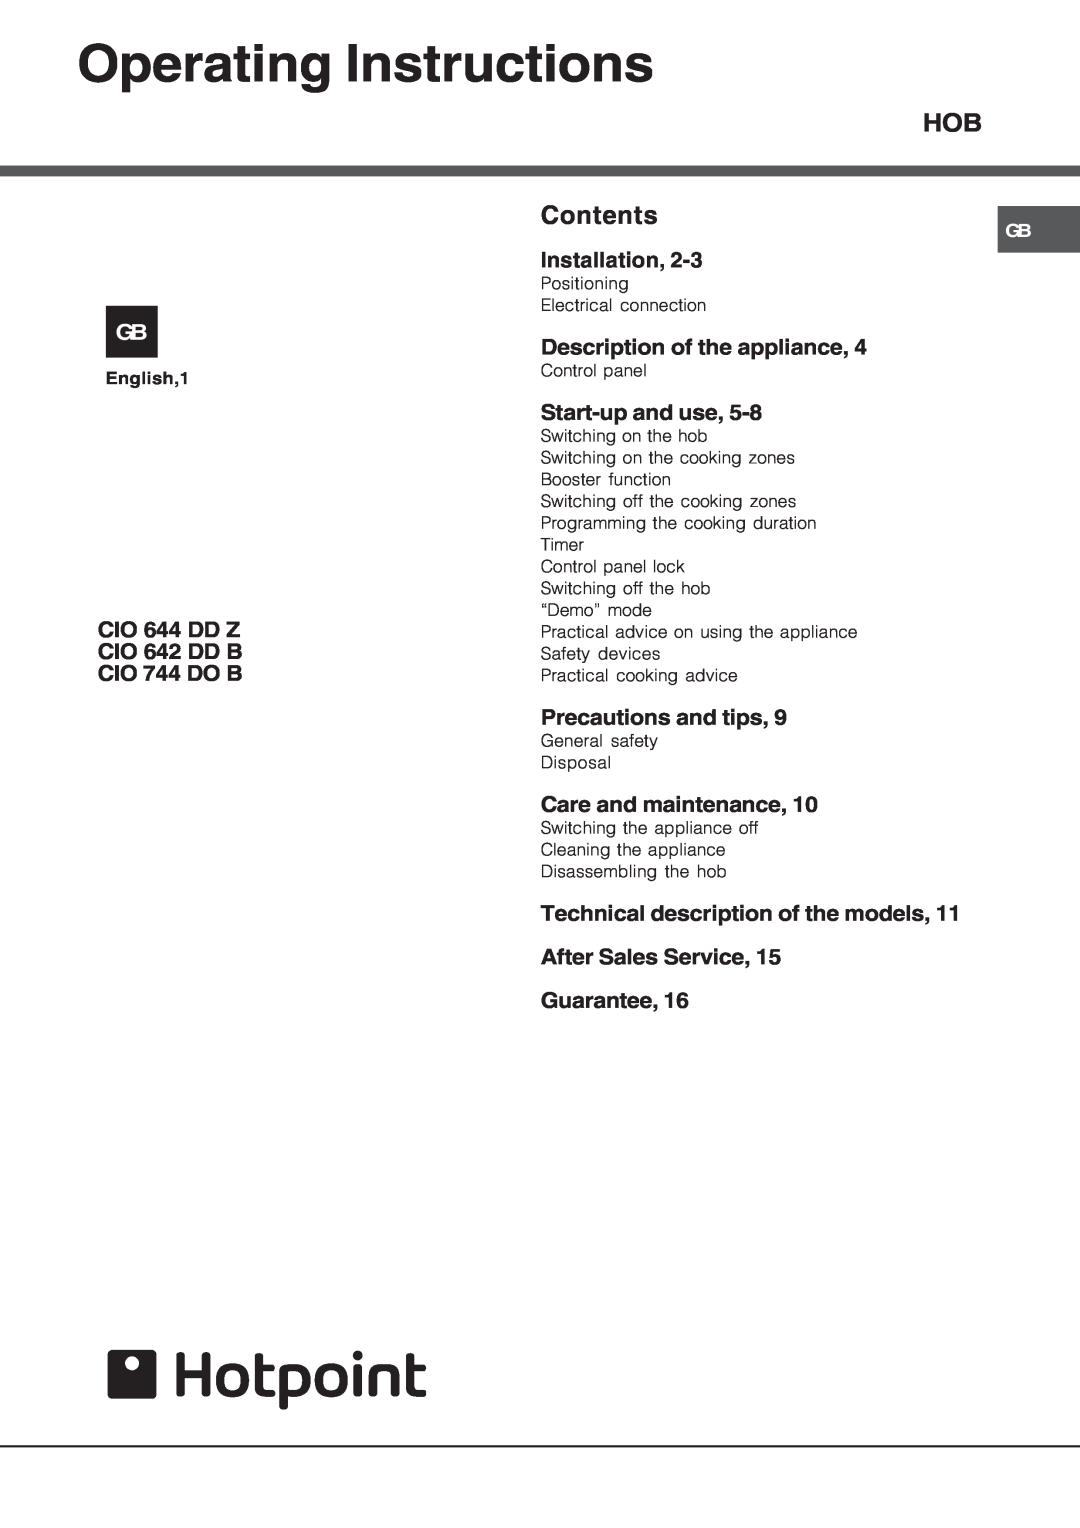 Hotpoint CIO 744 DO B, CIO 642 DD B, CIO 640 DD Z manual Operating Instructions, Contents 